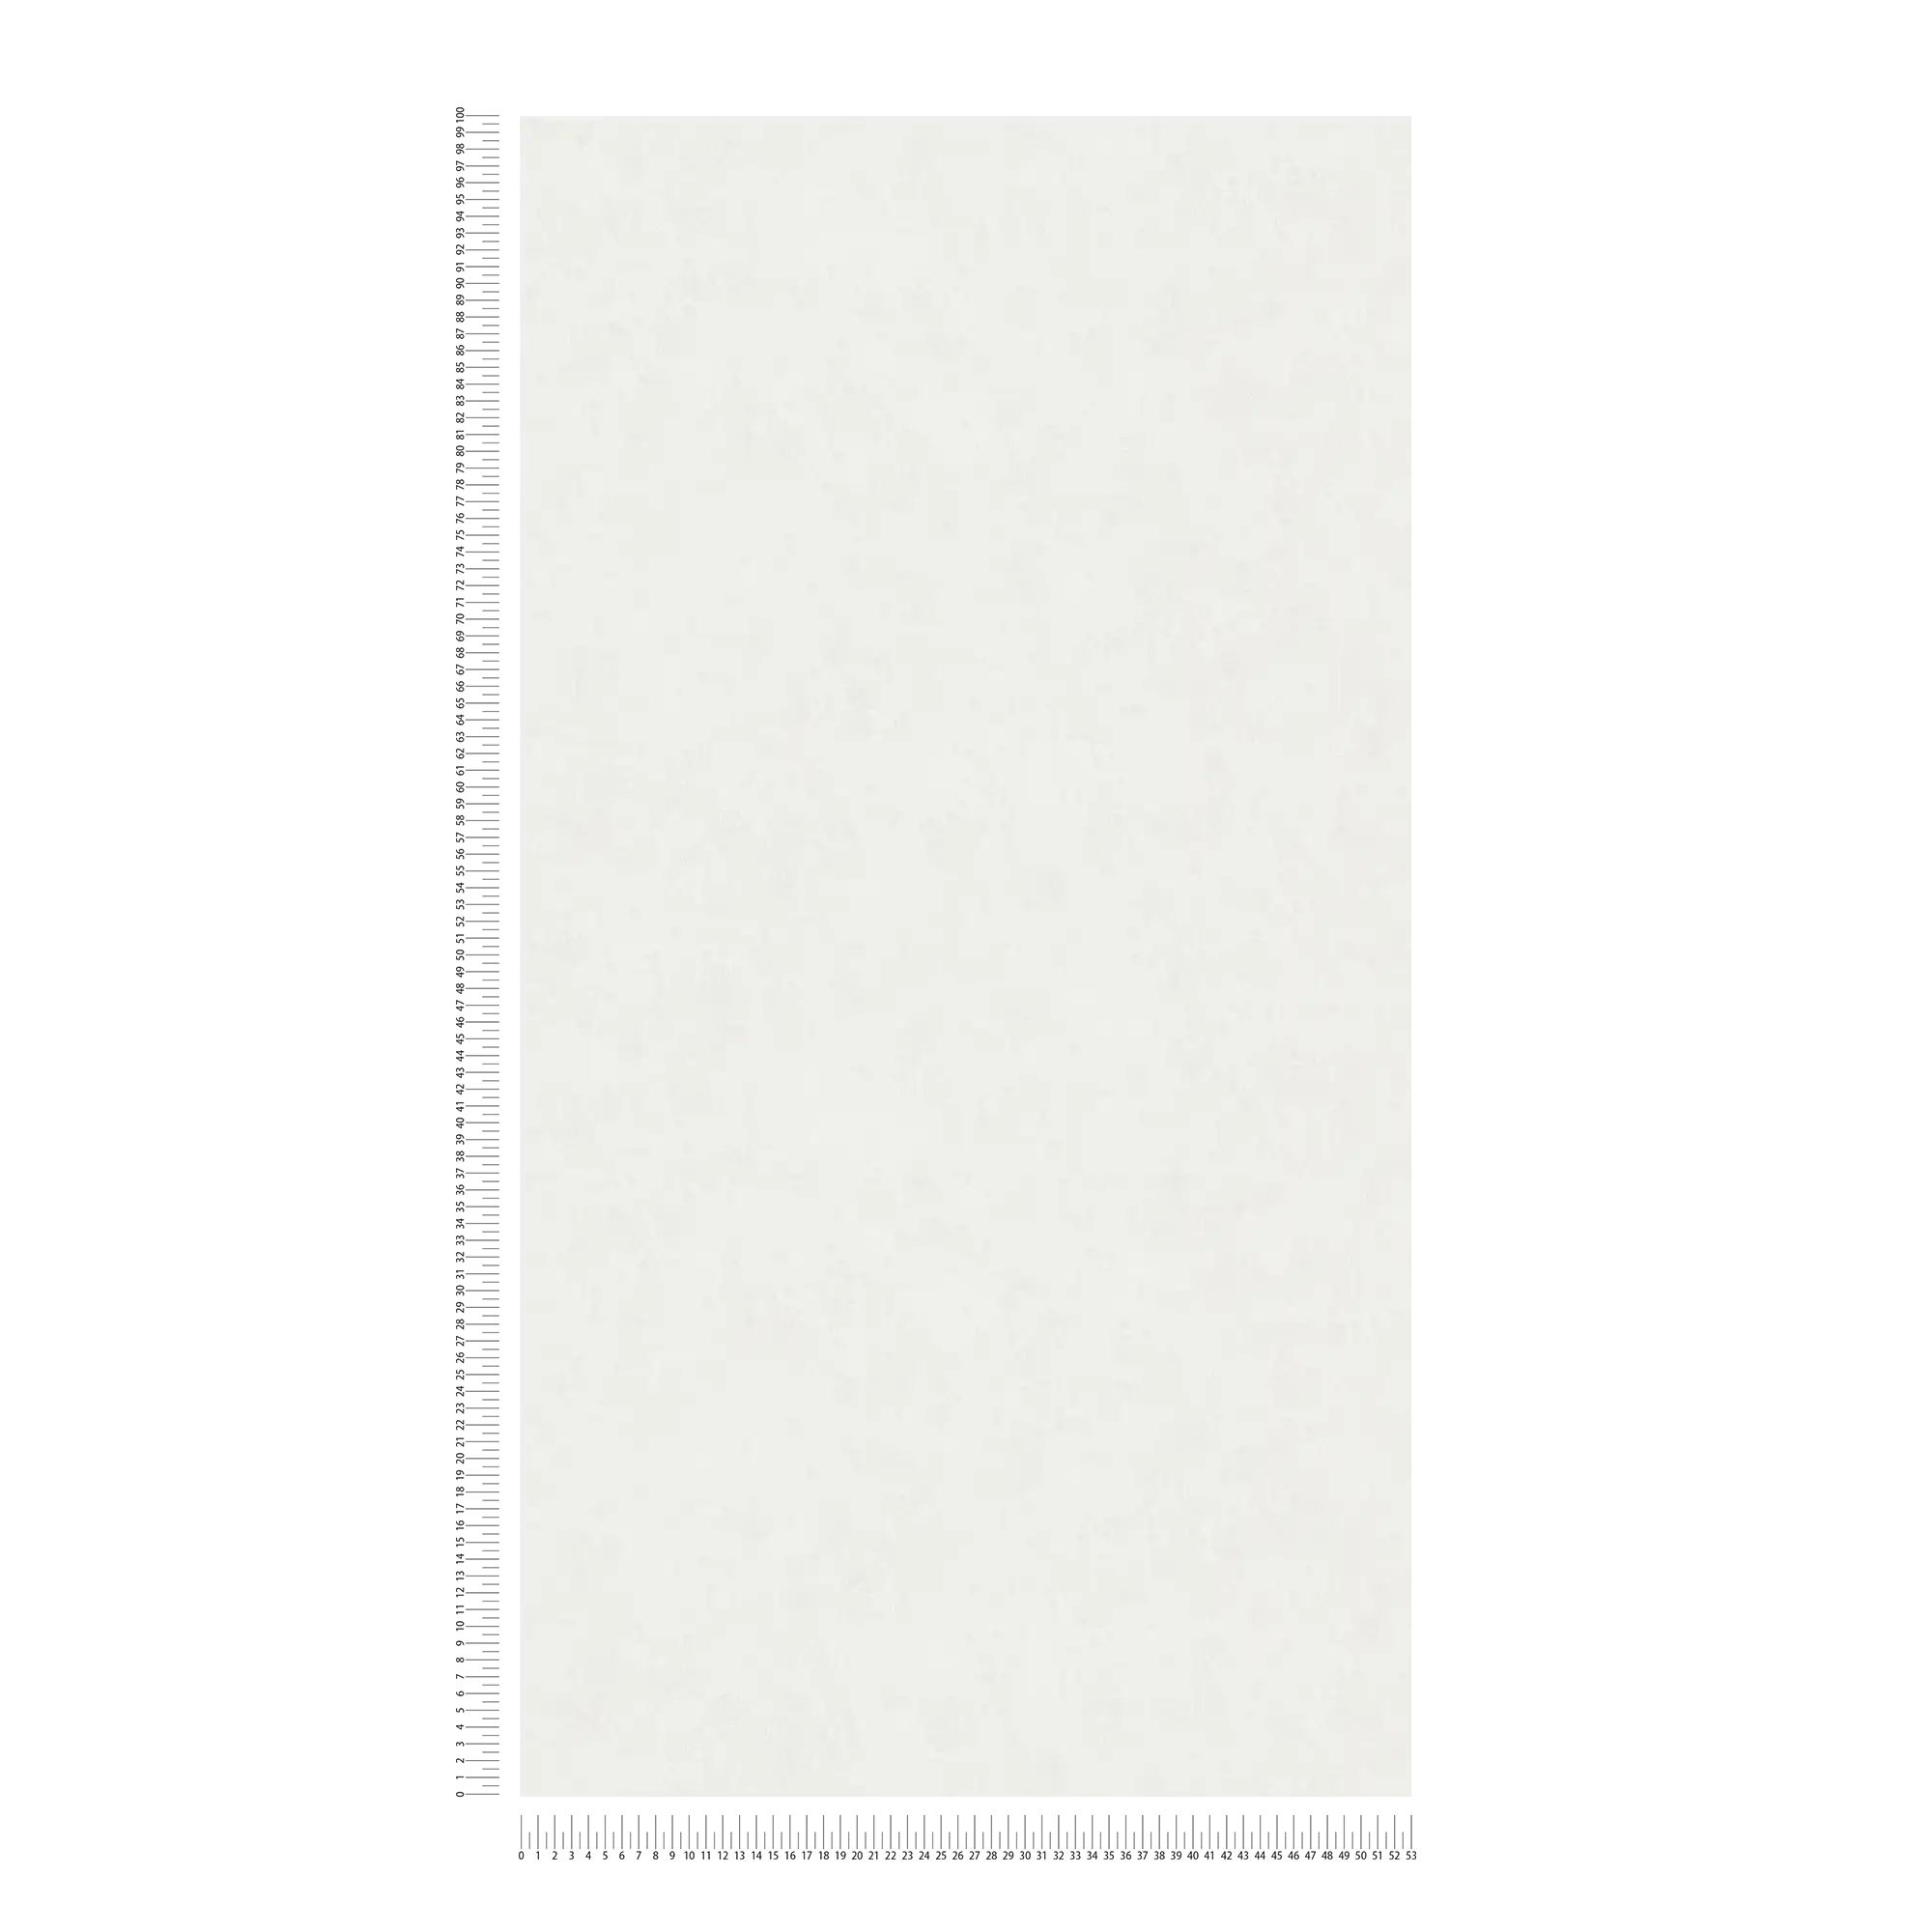             Textured wallpaper in monochrome shades - light grey
        